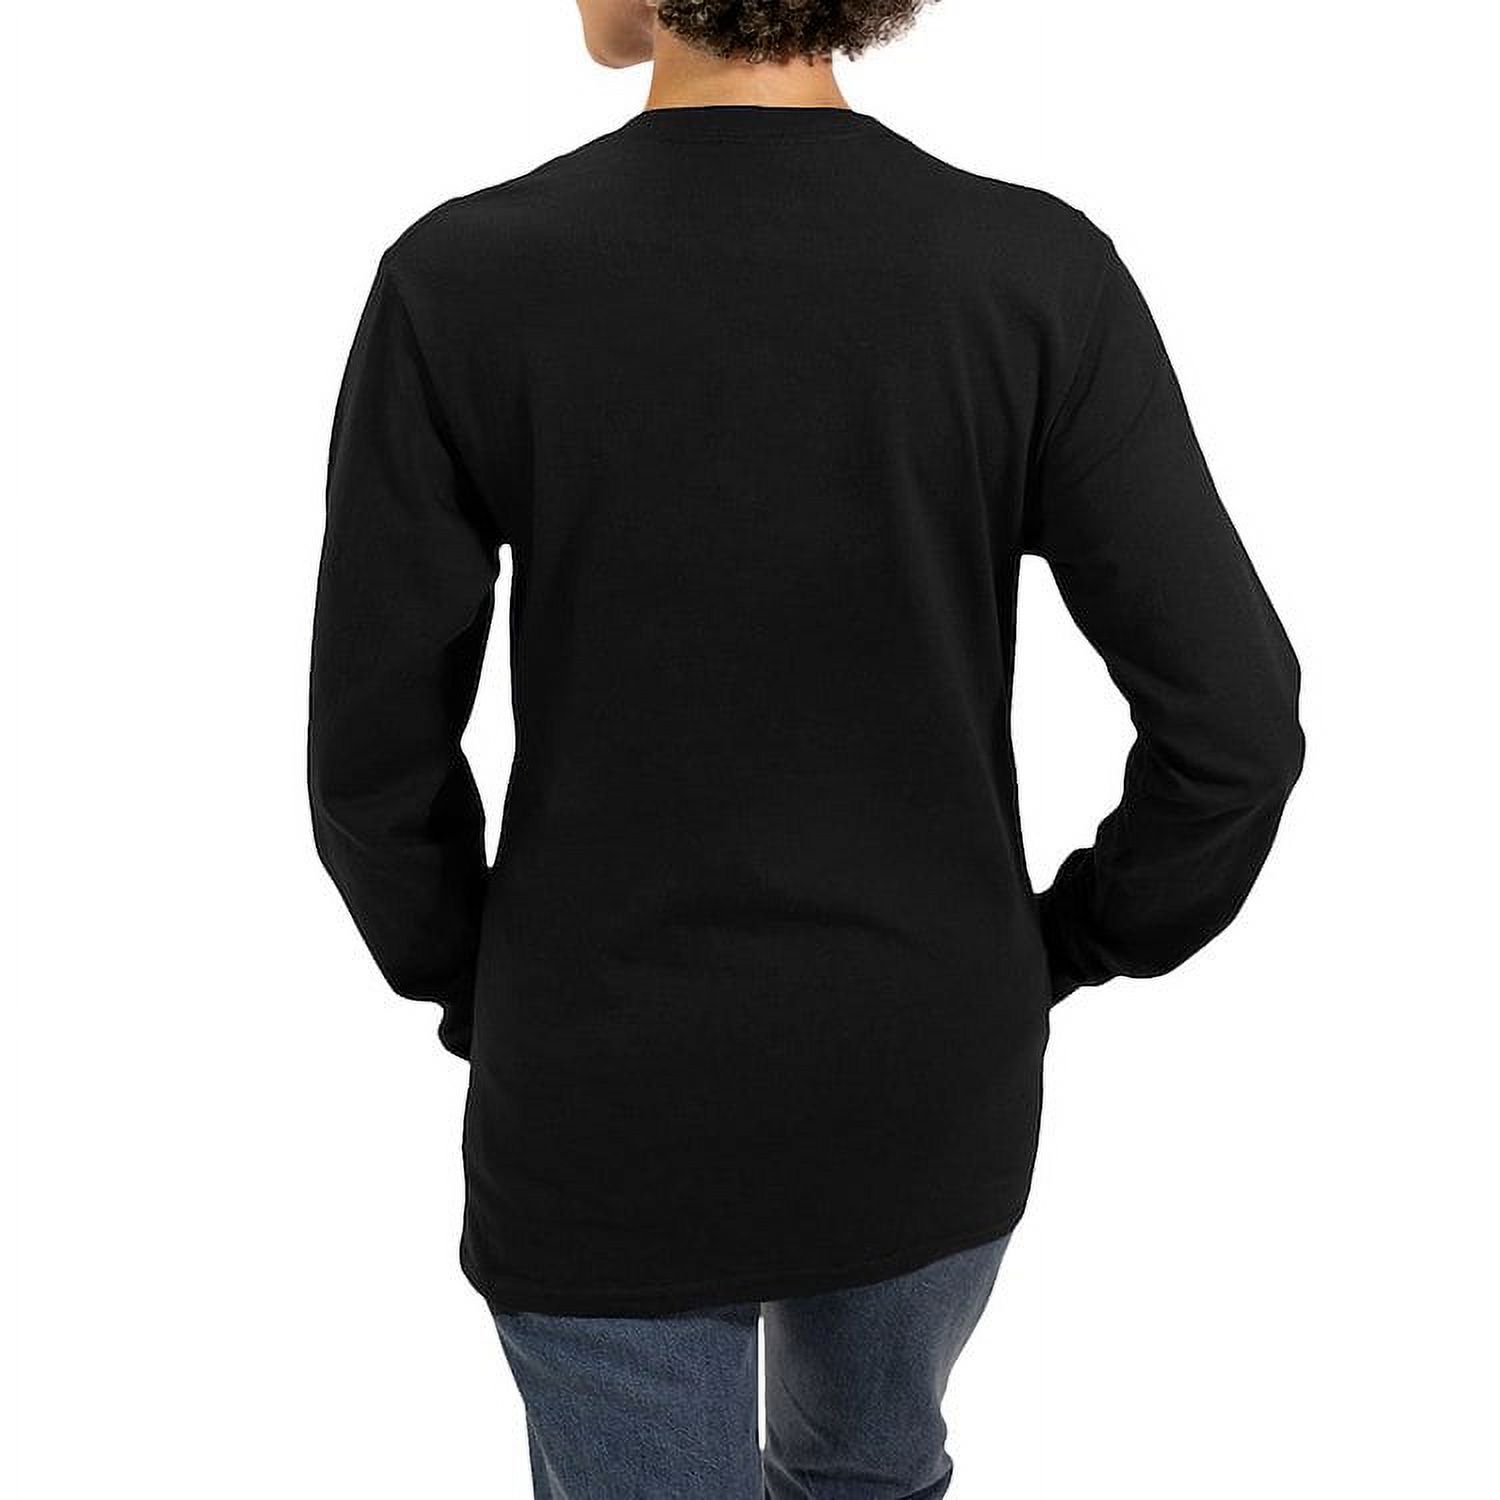 CafePress - Liebe Ist... 2 Women's Long Sleeve Dark T Shirt - Women's Long Sleeve Graphic Tee Casual Fit - image 2 of 4